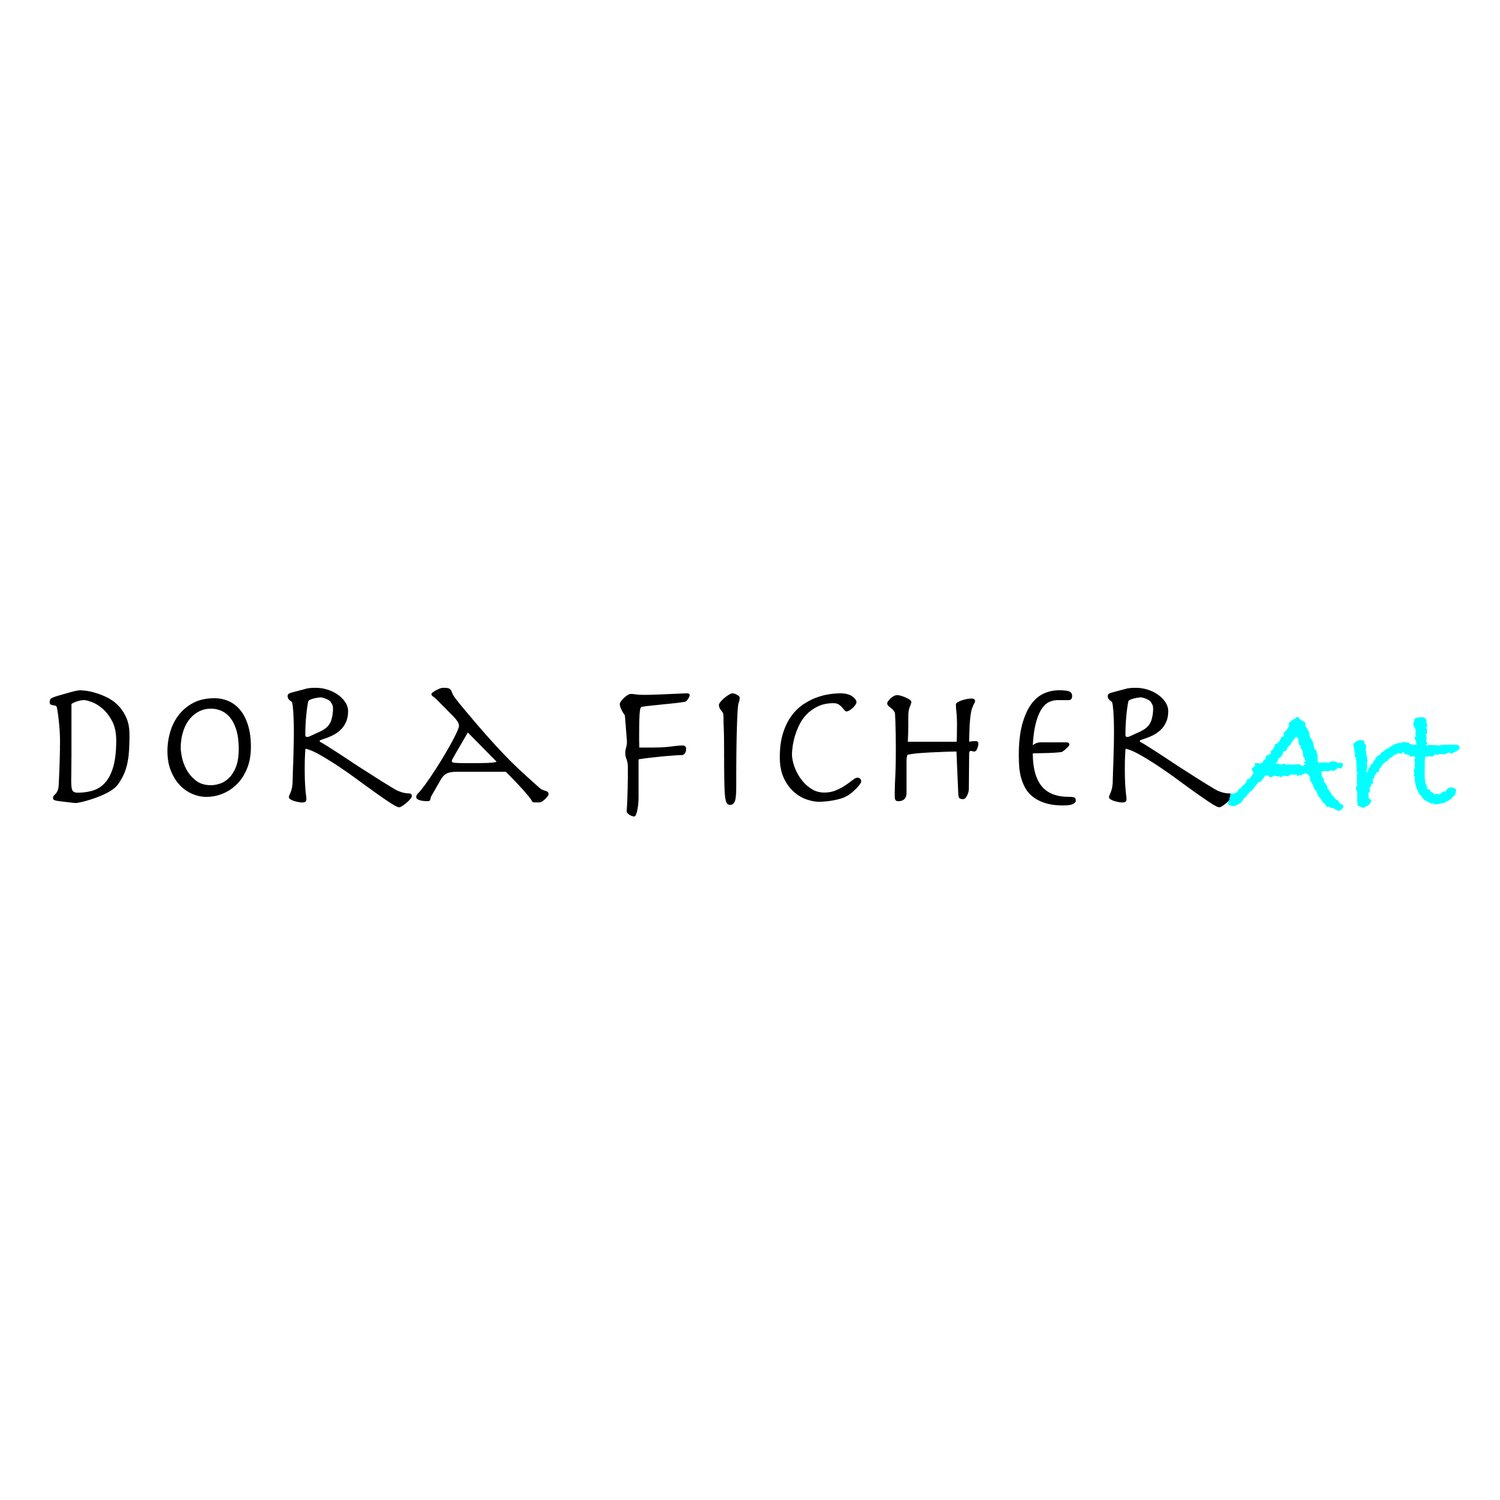 Dora Ficher Art